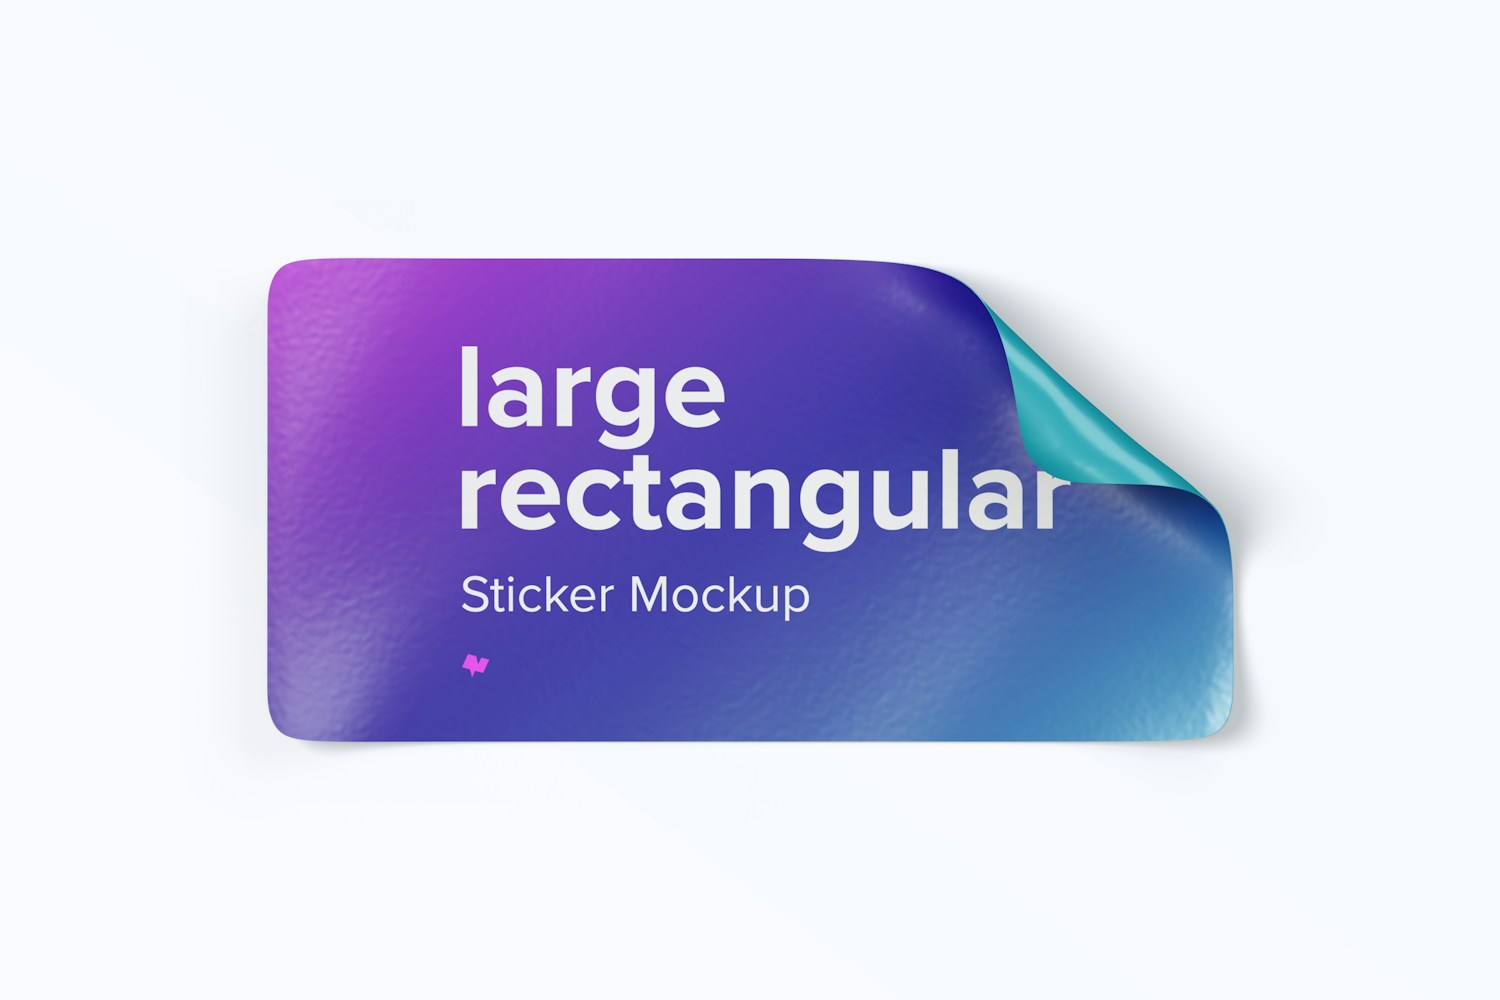 Large Rectangular Sticker Mockup, Top View 02